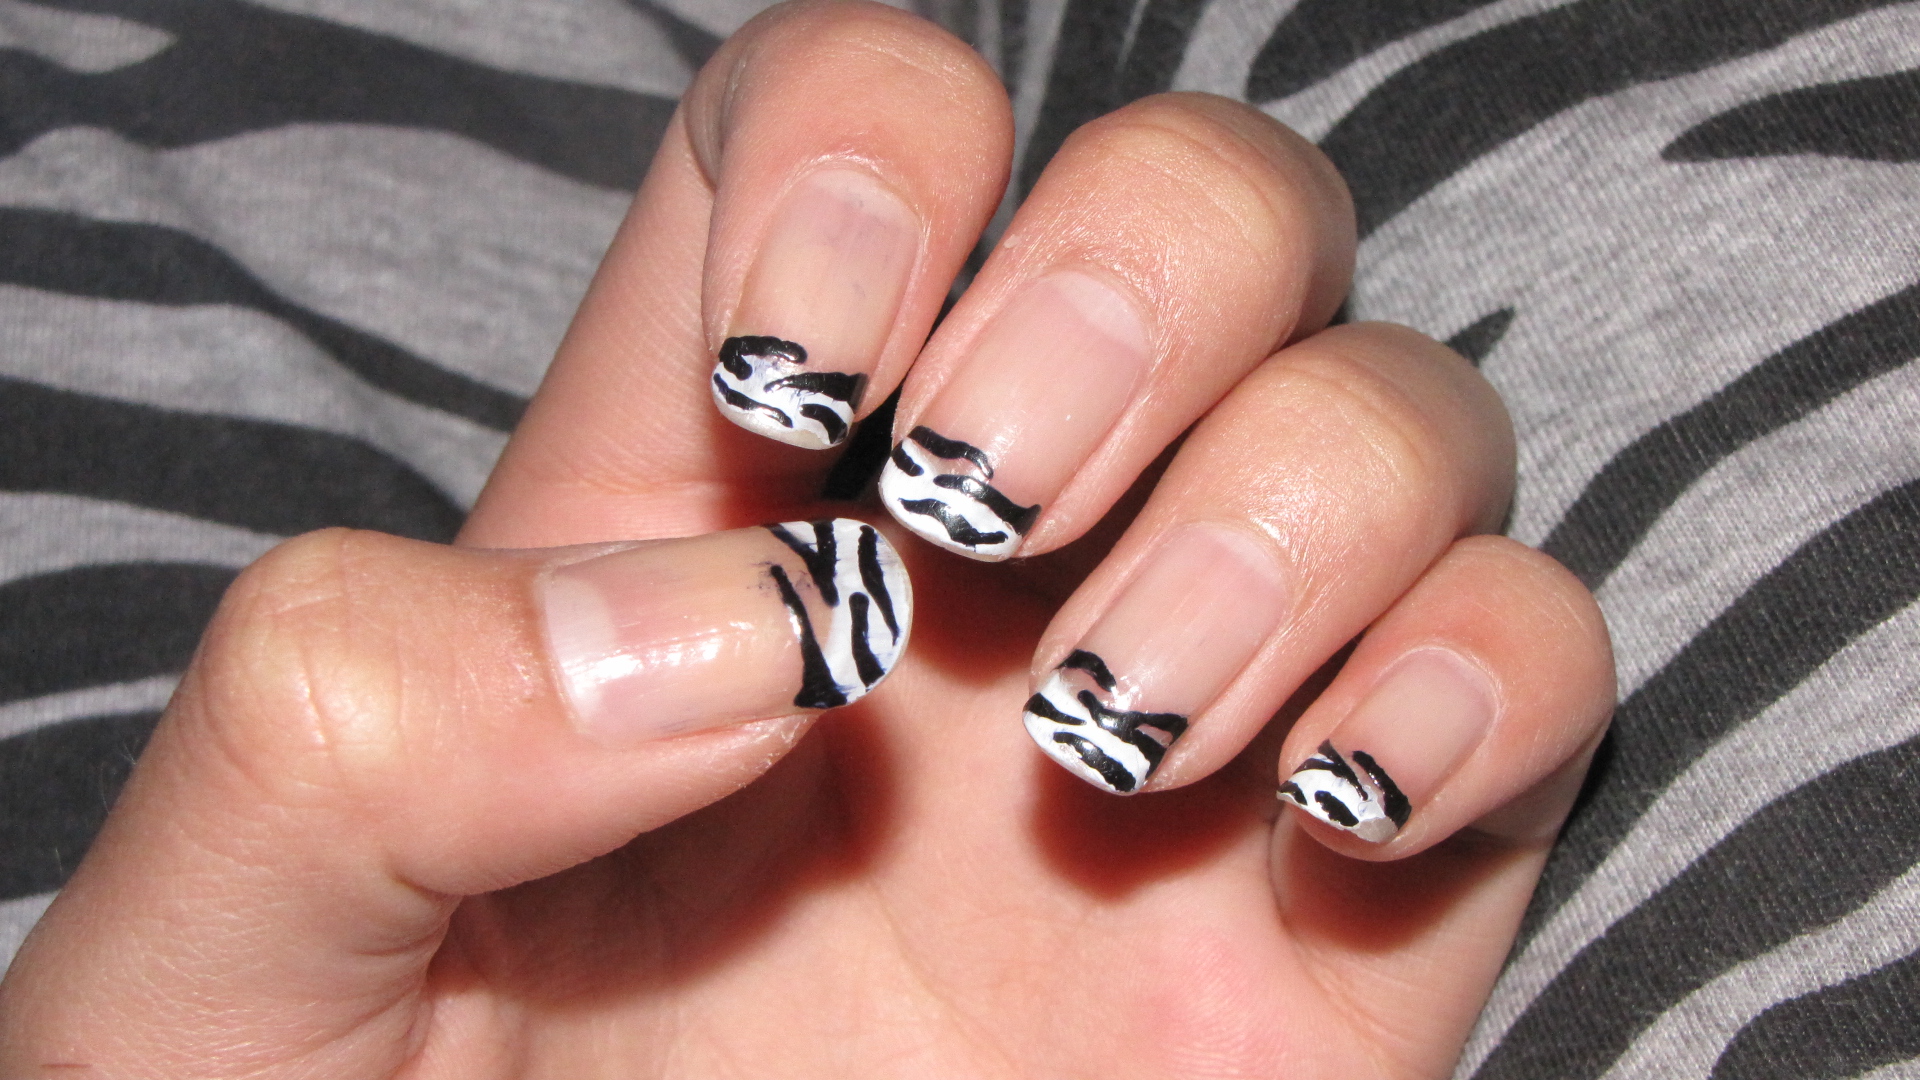 White Tip Nails With Zebra Design Its a zebra print french tip